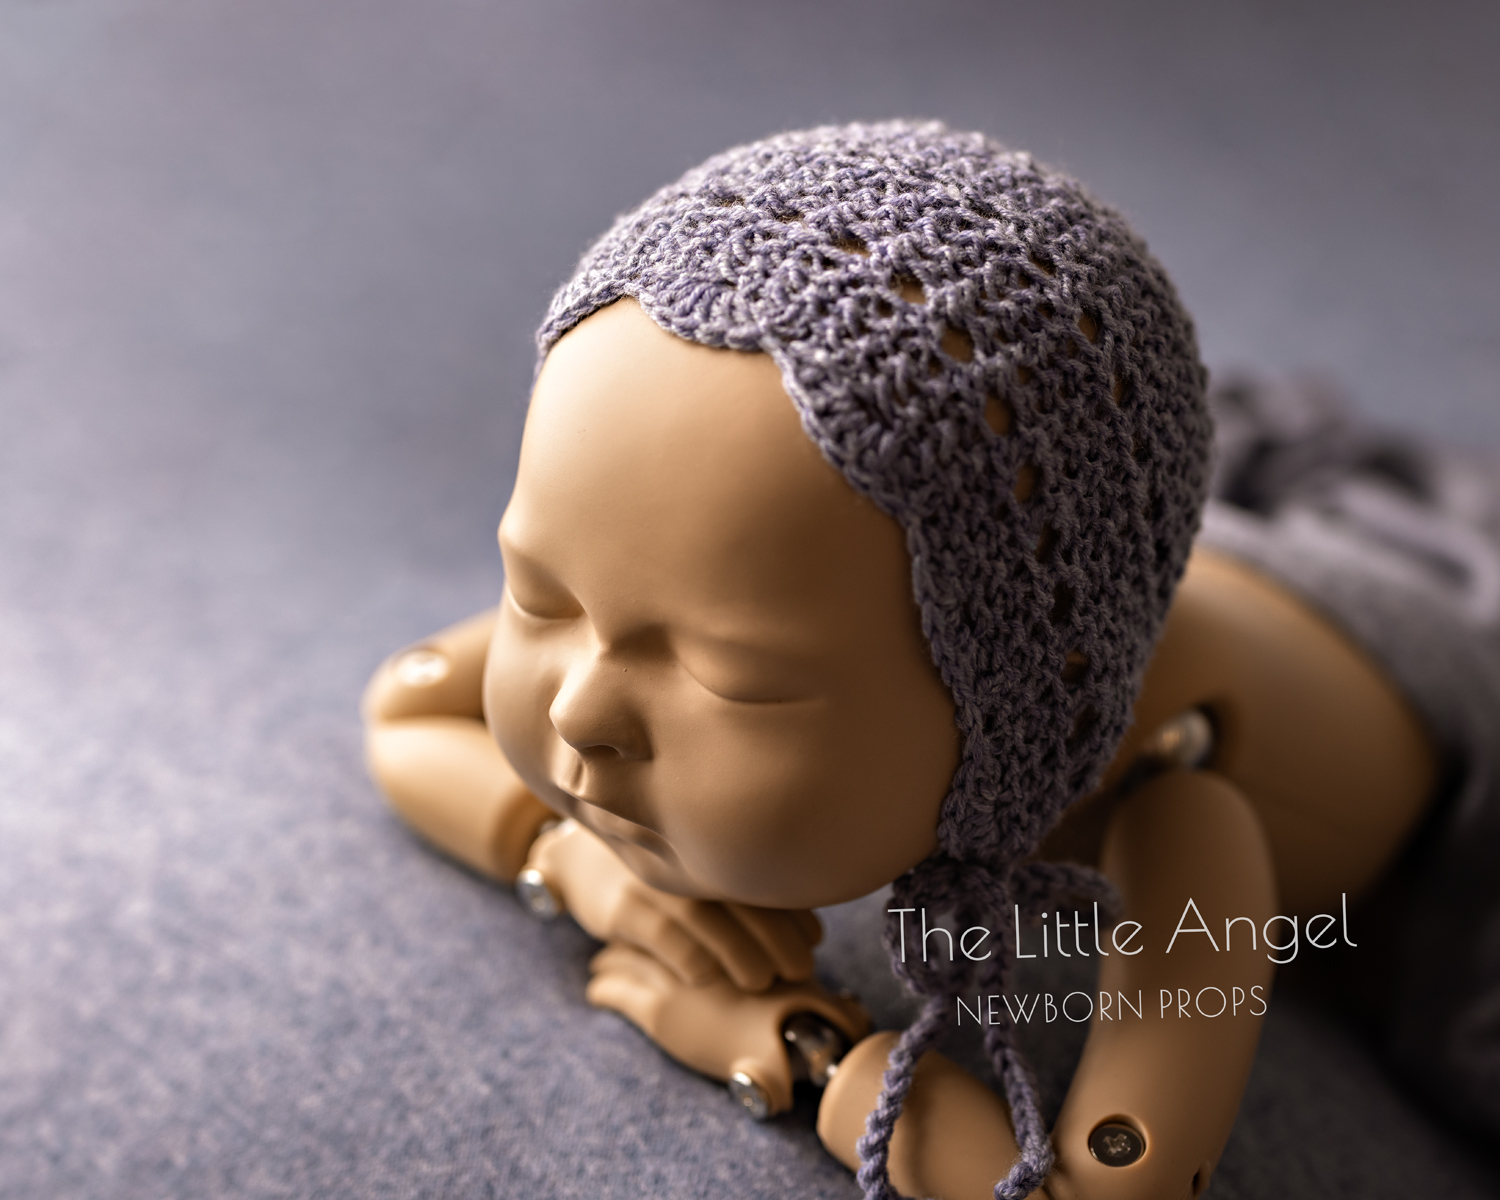 The Little Angel Newborn Props